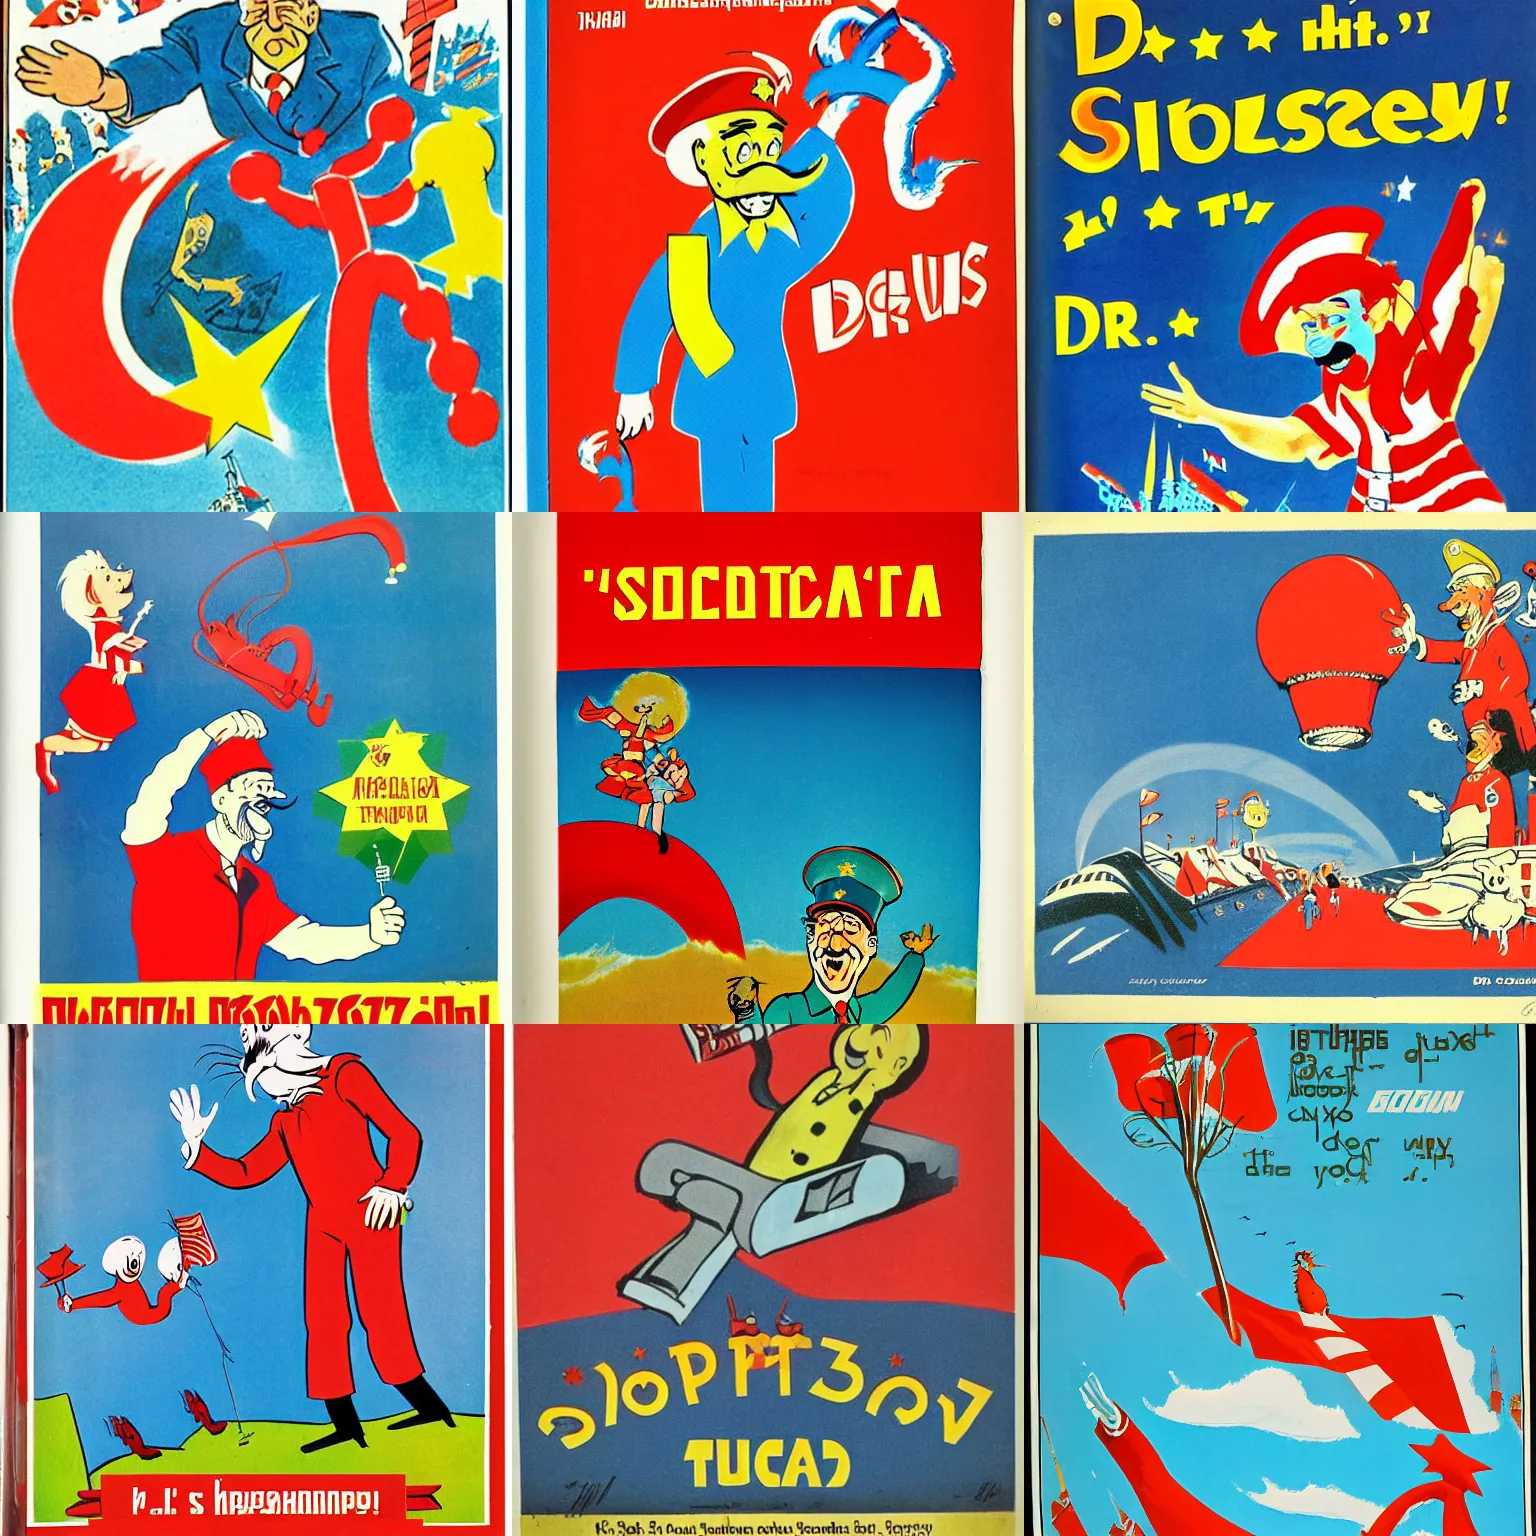 Prompt: soviet propaganda by dr. seuss, children's book illustration